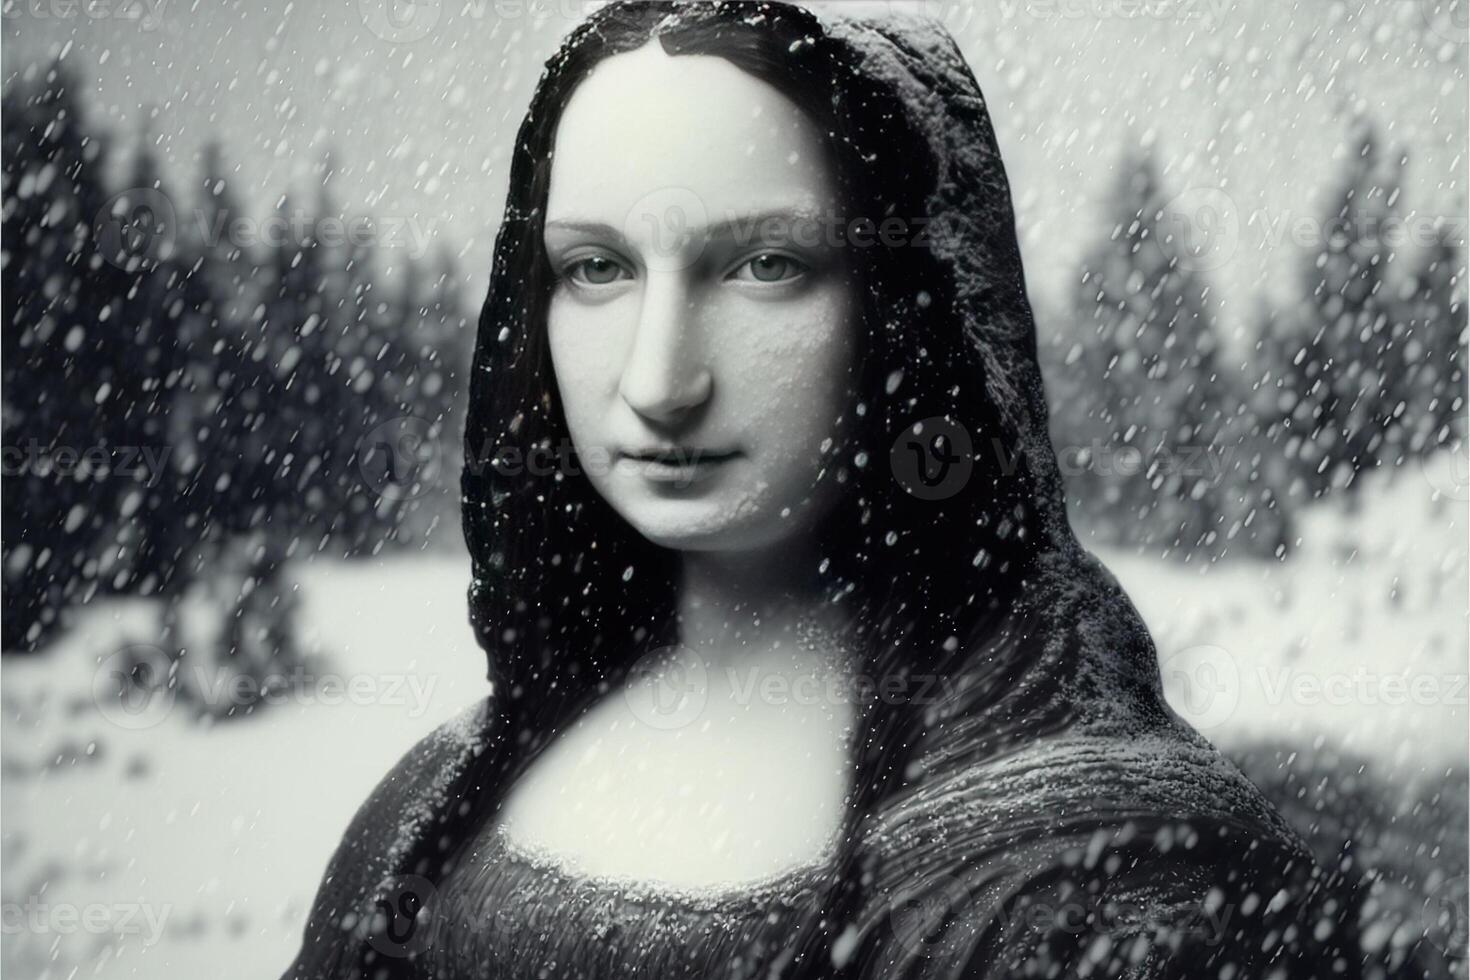 modern style mona lisa portrait under the snow illustration photo